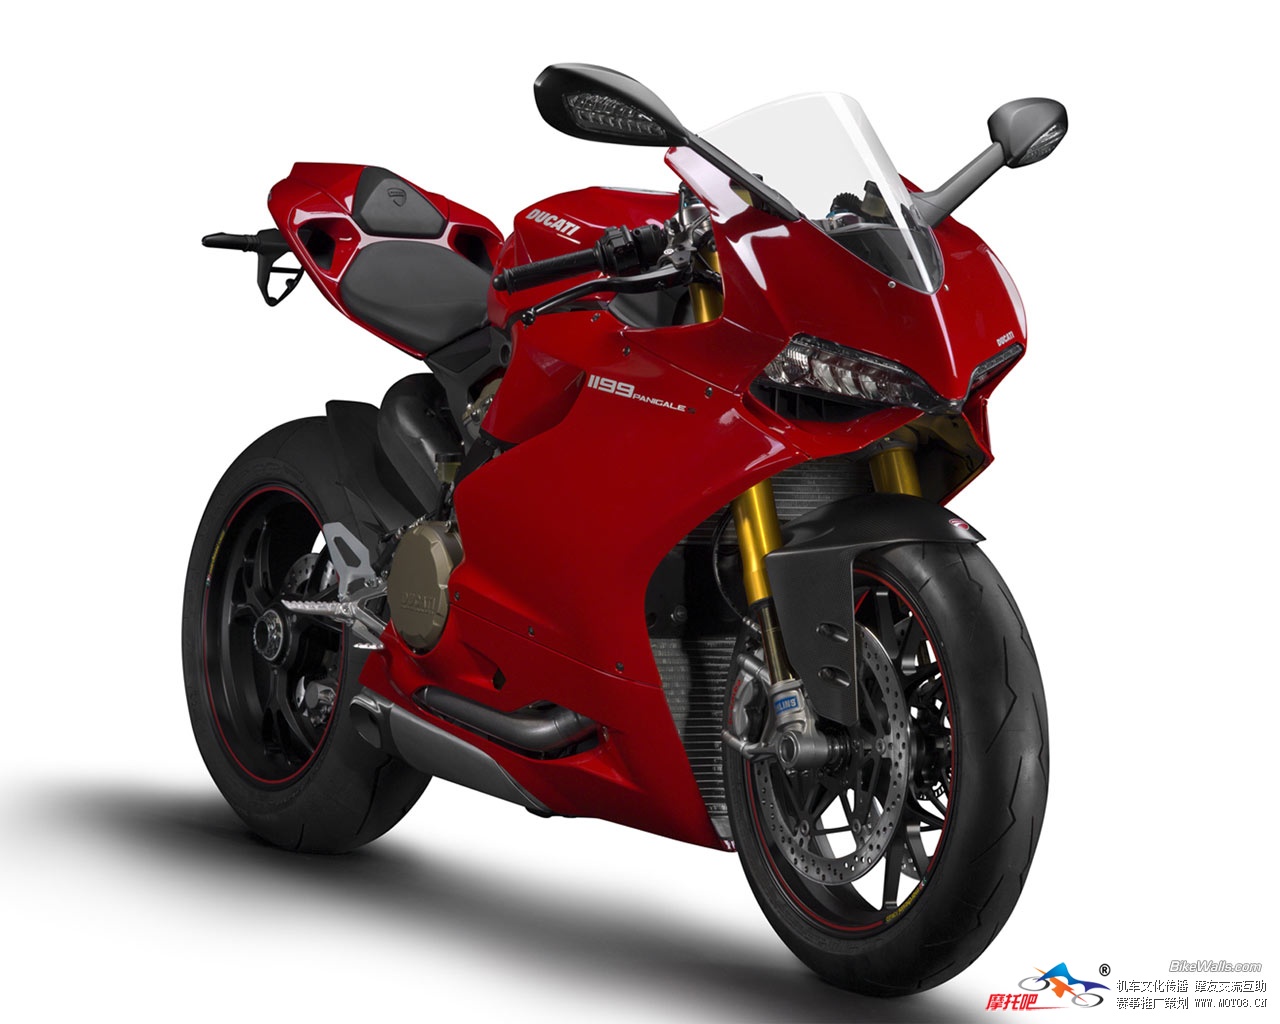 Ducati_1199_Pangale_S_2012_01_1280x1024.jpg